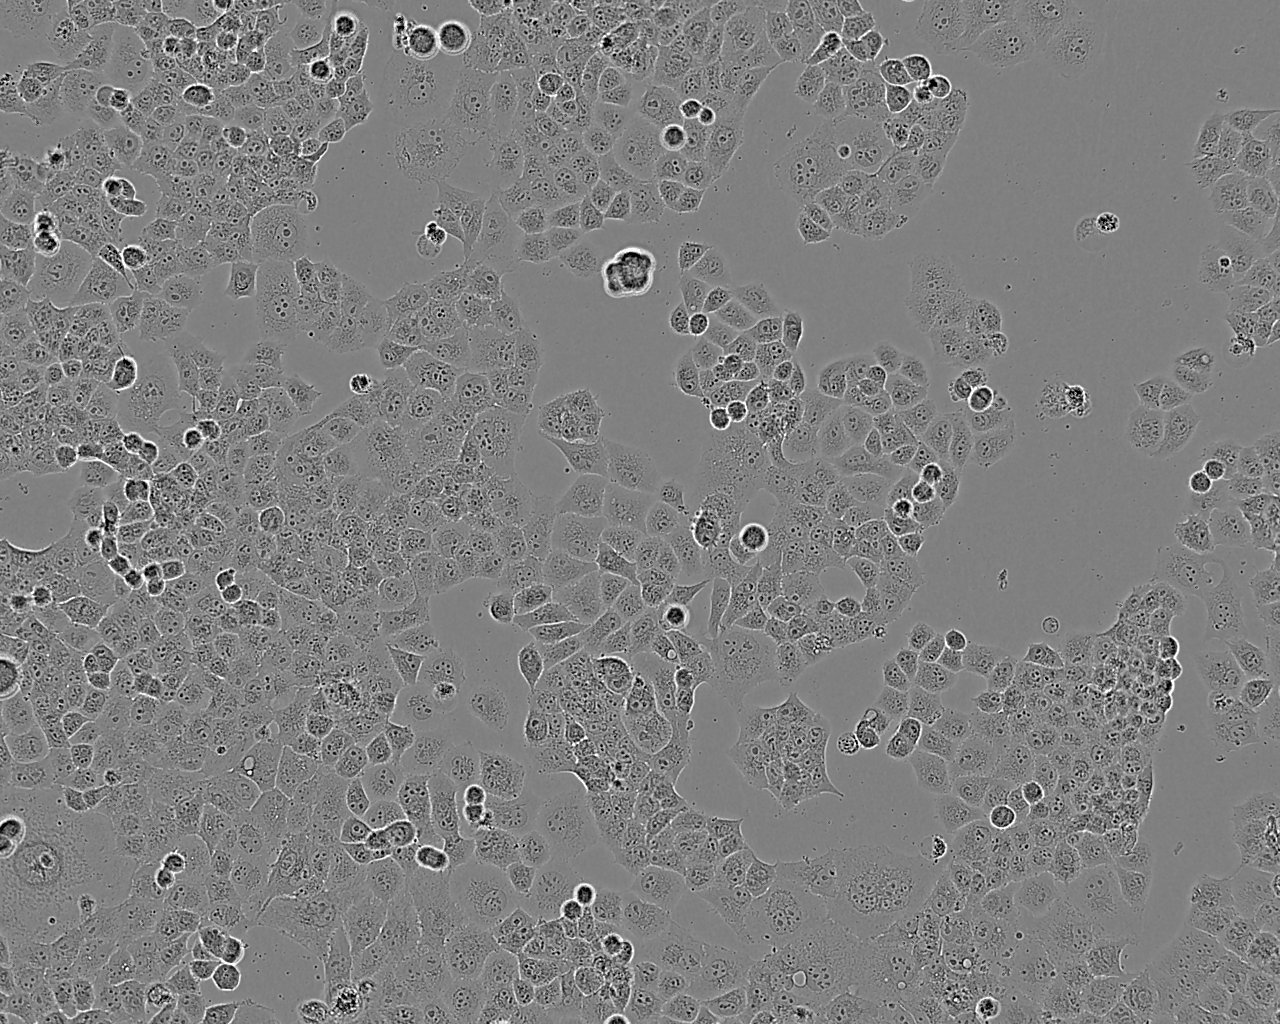 SMA-560 Cell:小鼠星形胶质瘤细胞系